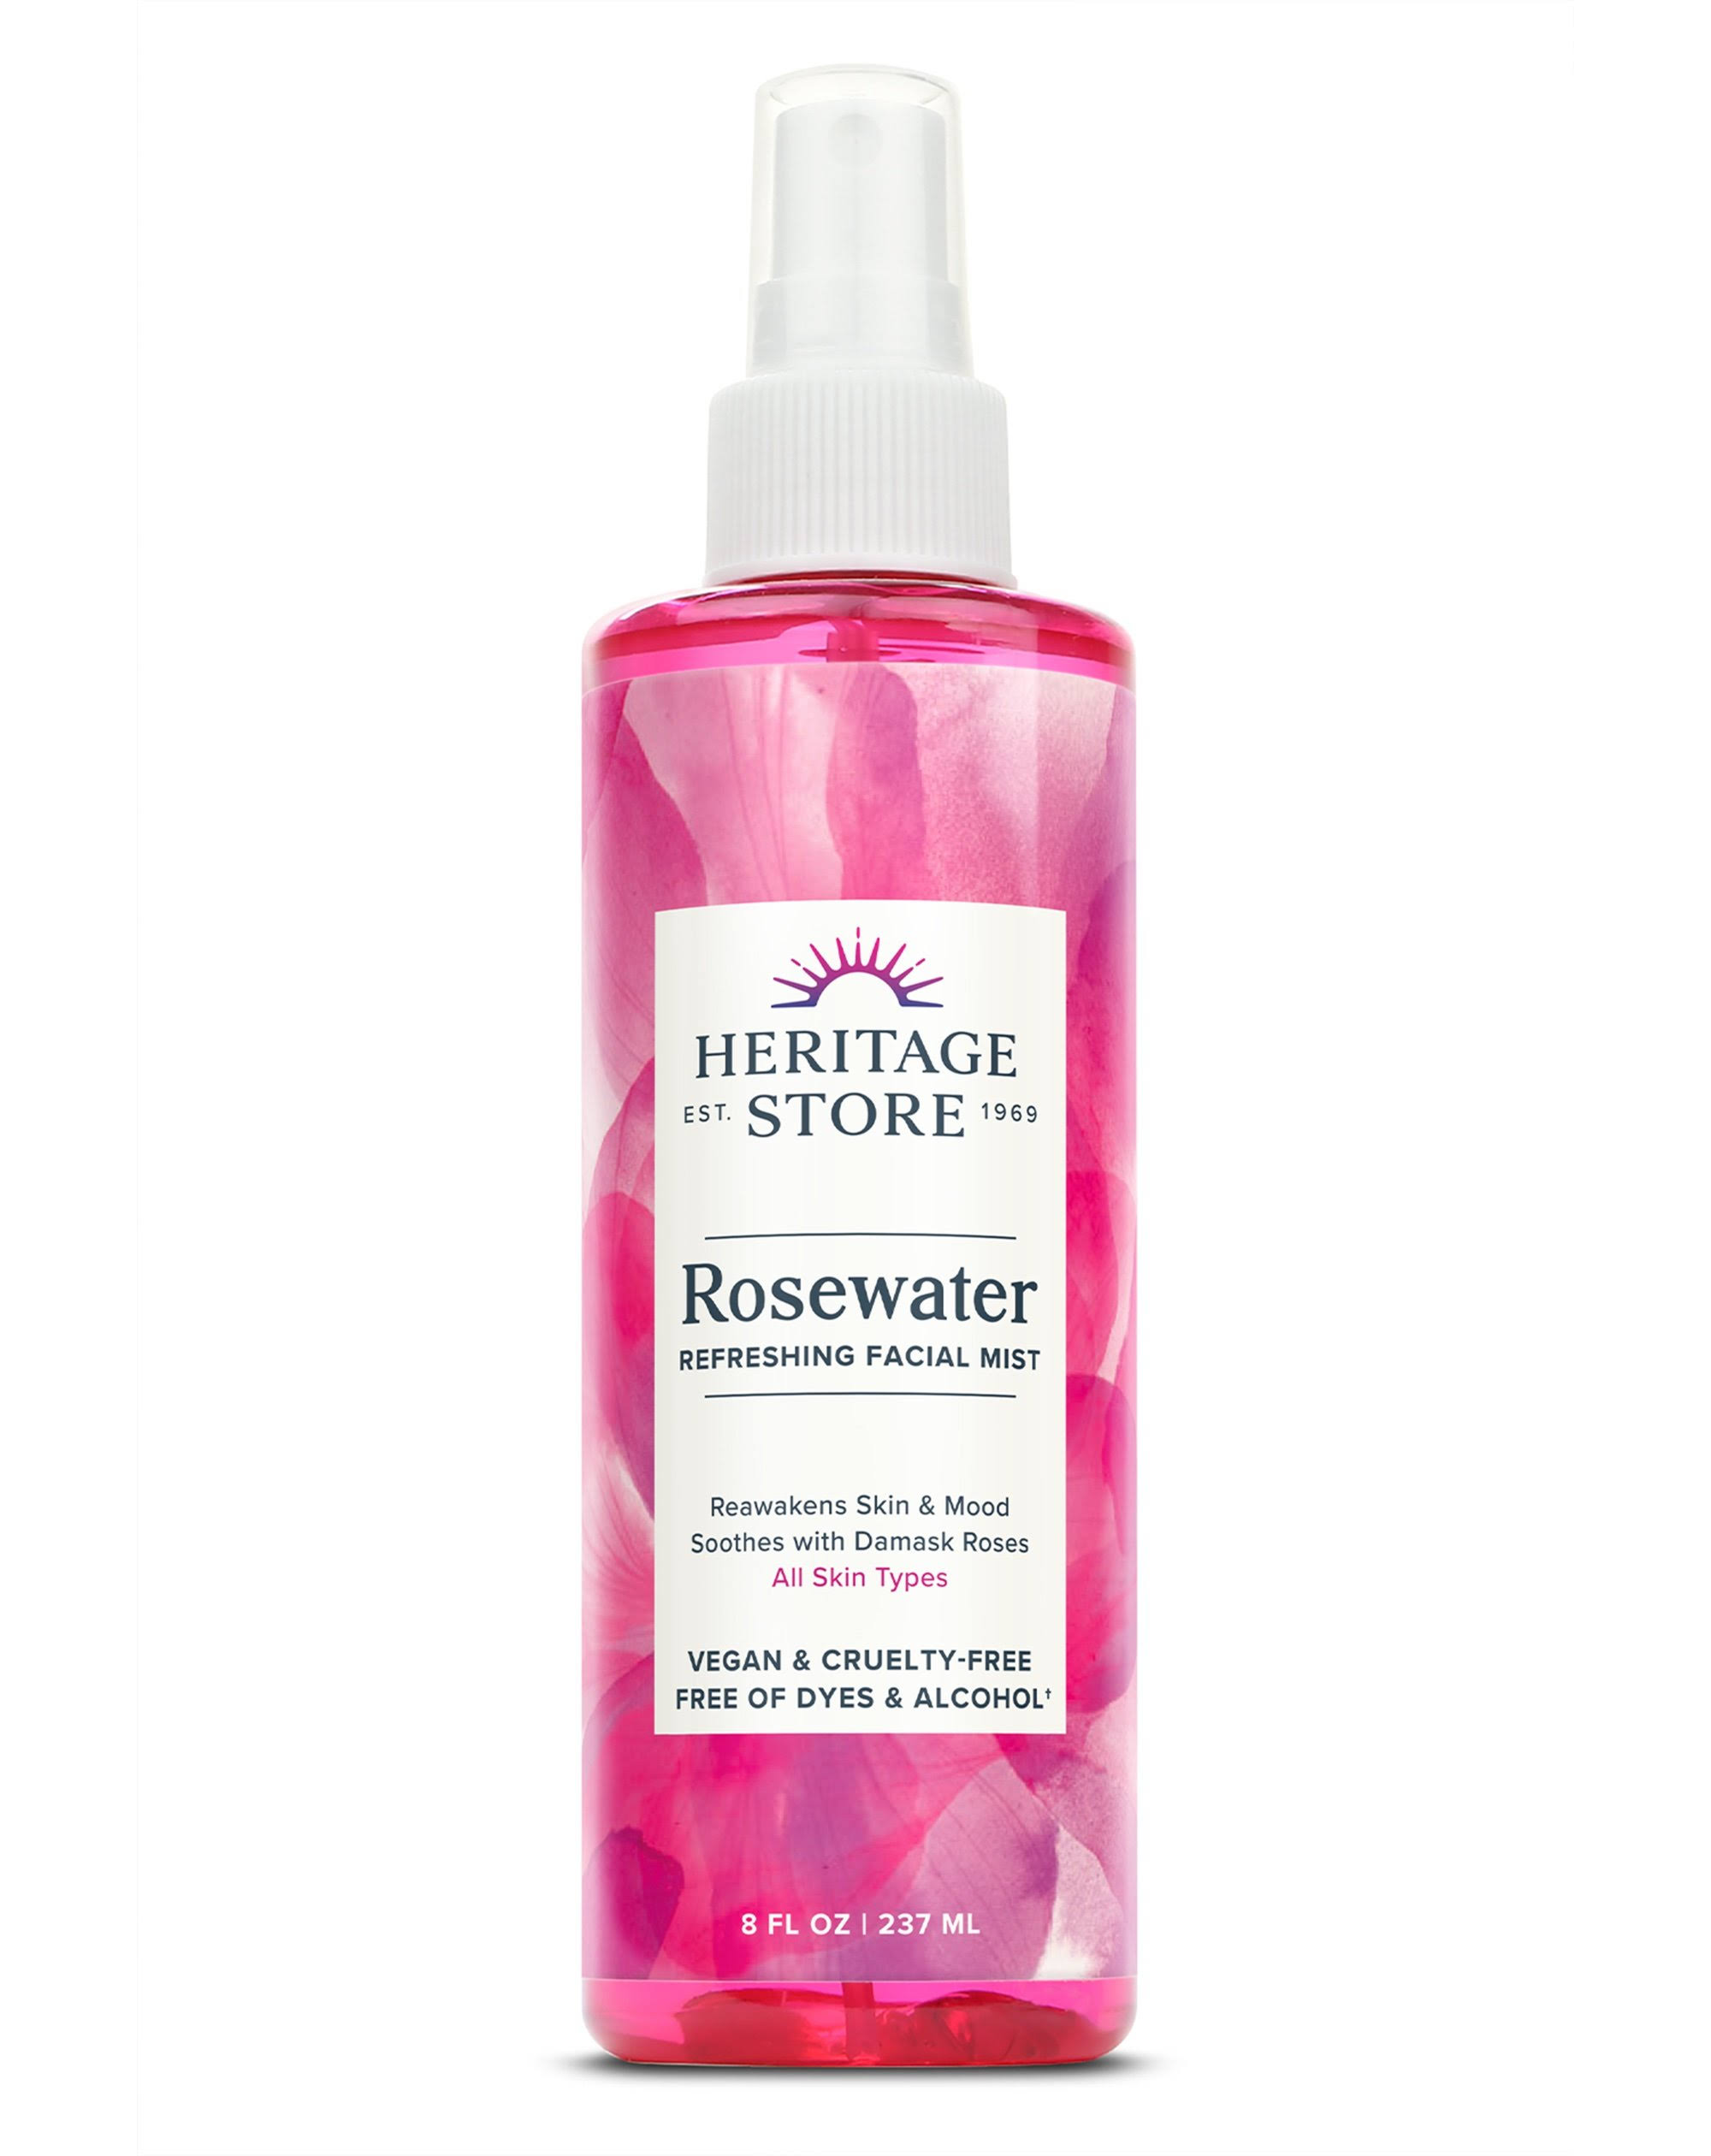 Heritage Store Rosewater Atomizer Mist Sprayer Rose Petals 8 fl oz